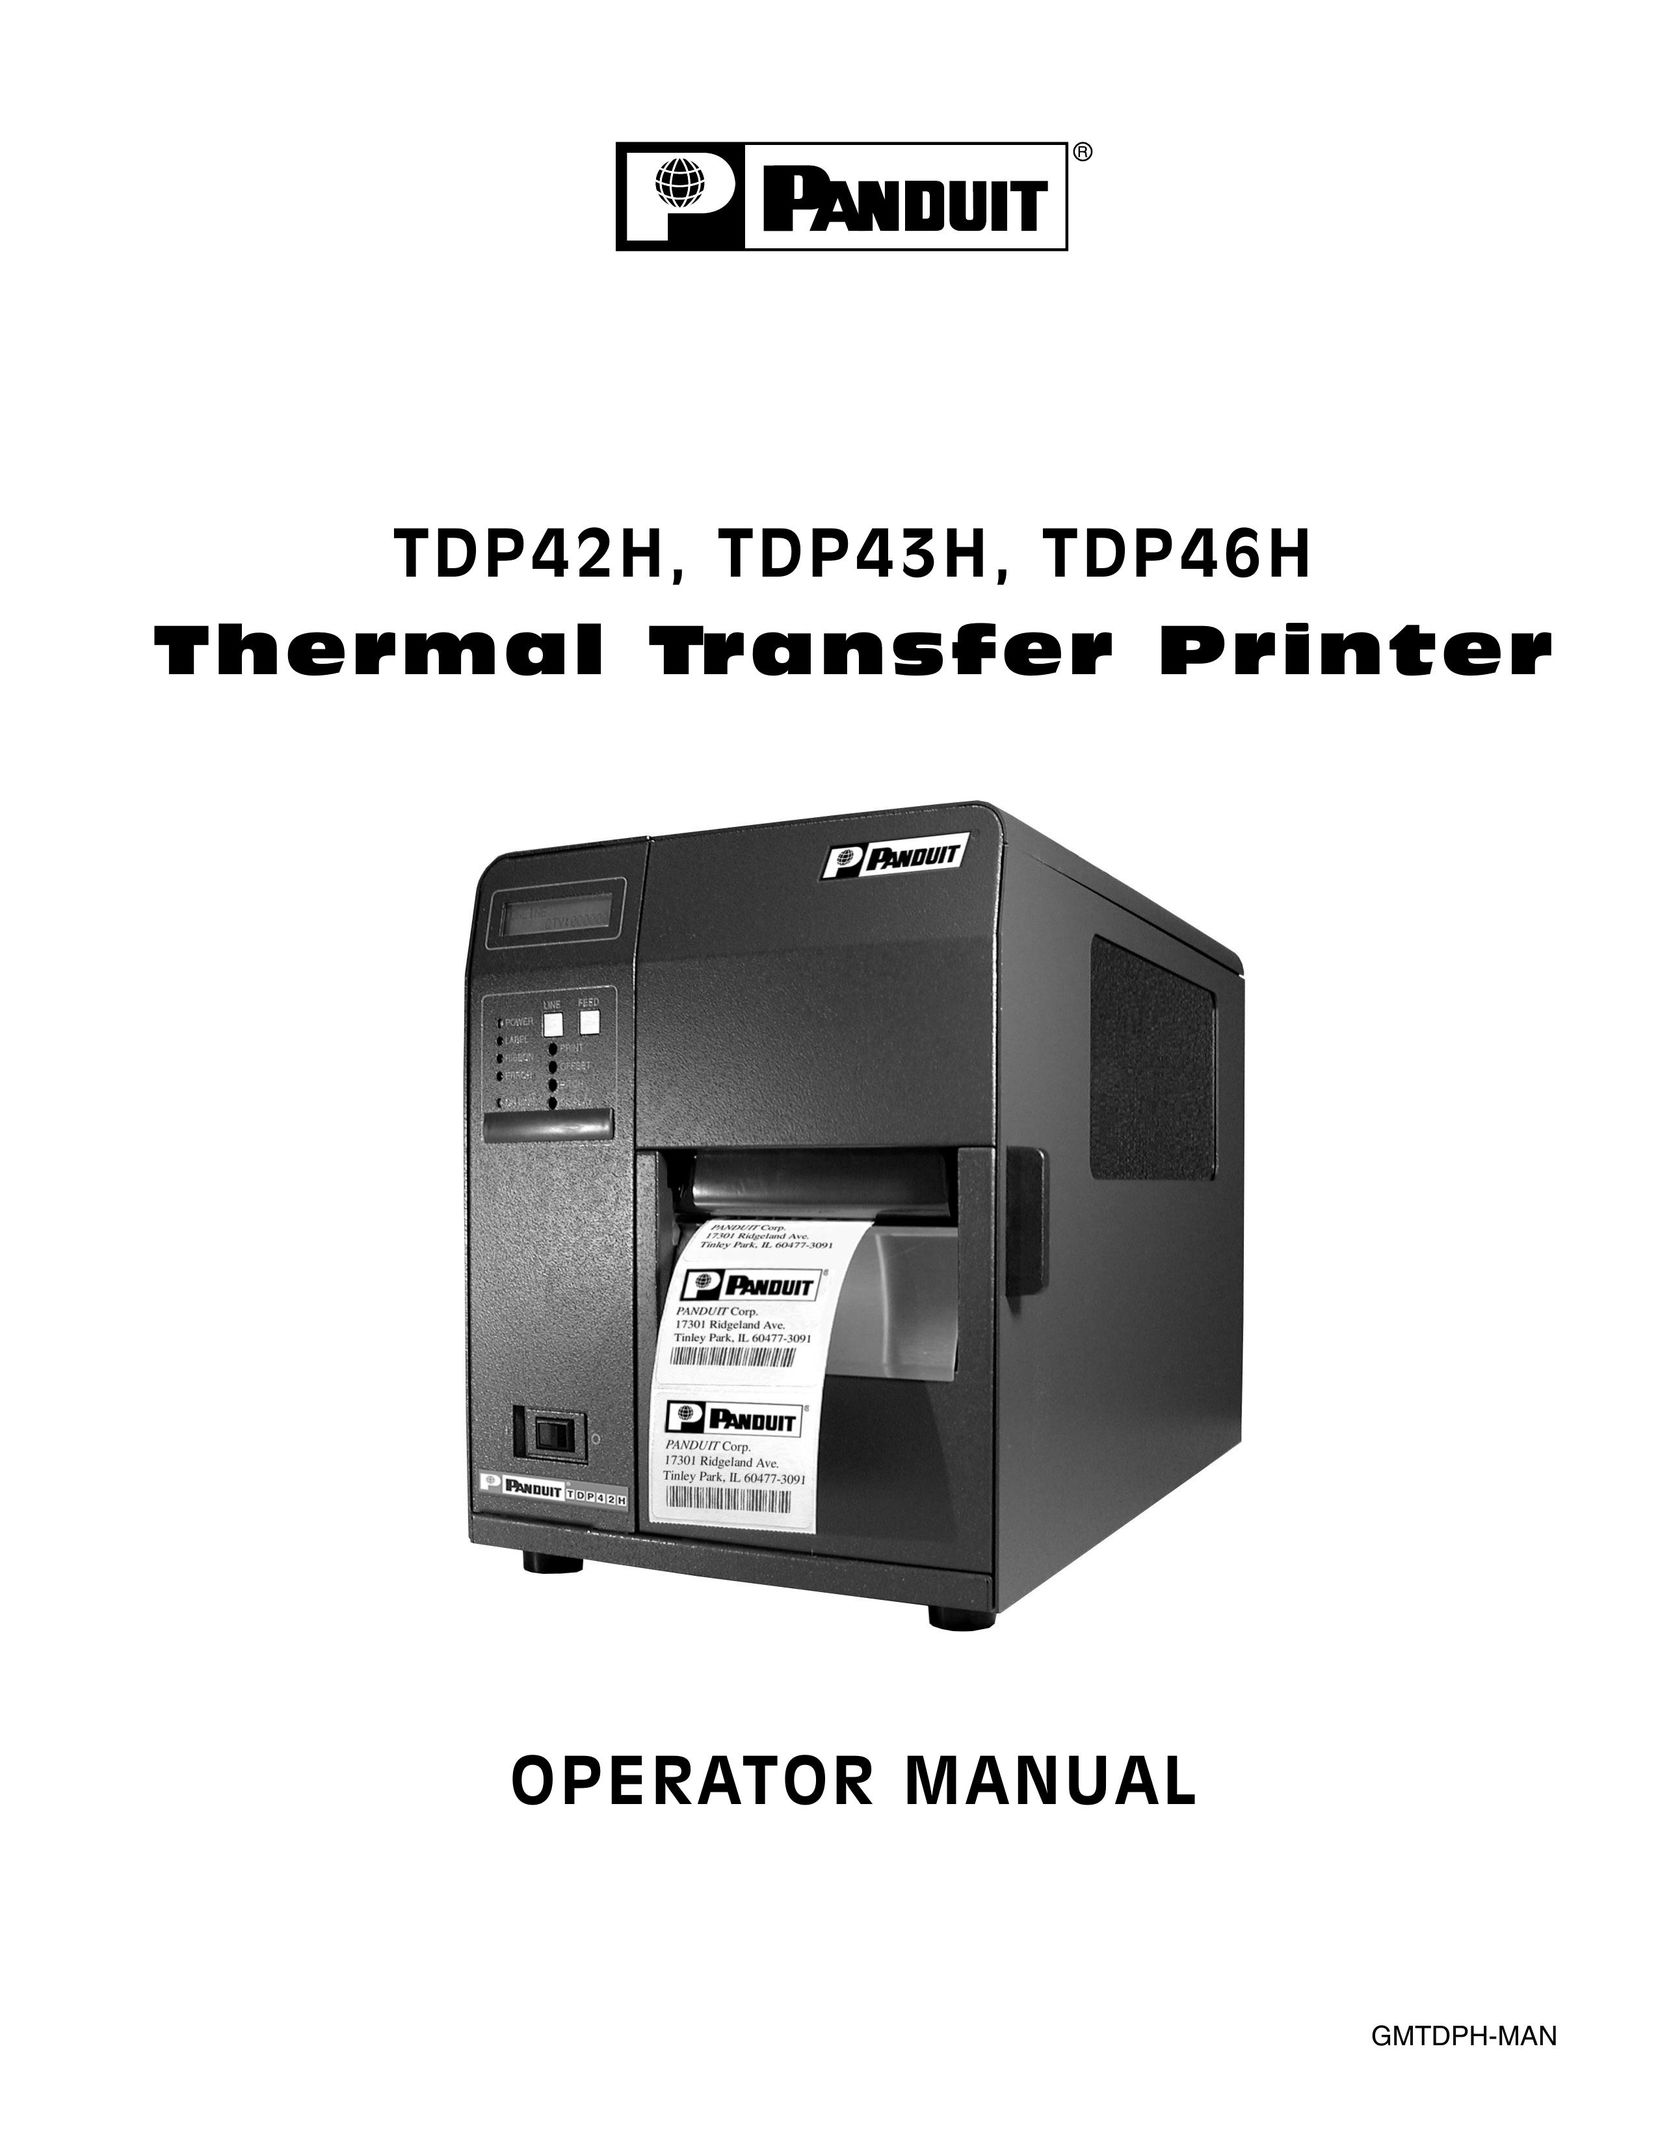 Panduit TDP43H Printer User Manual